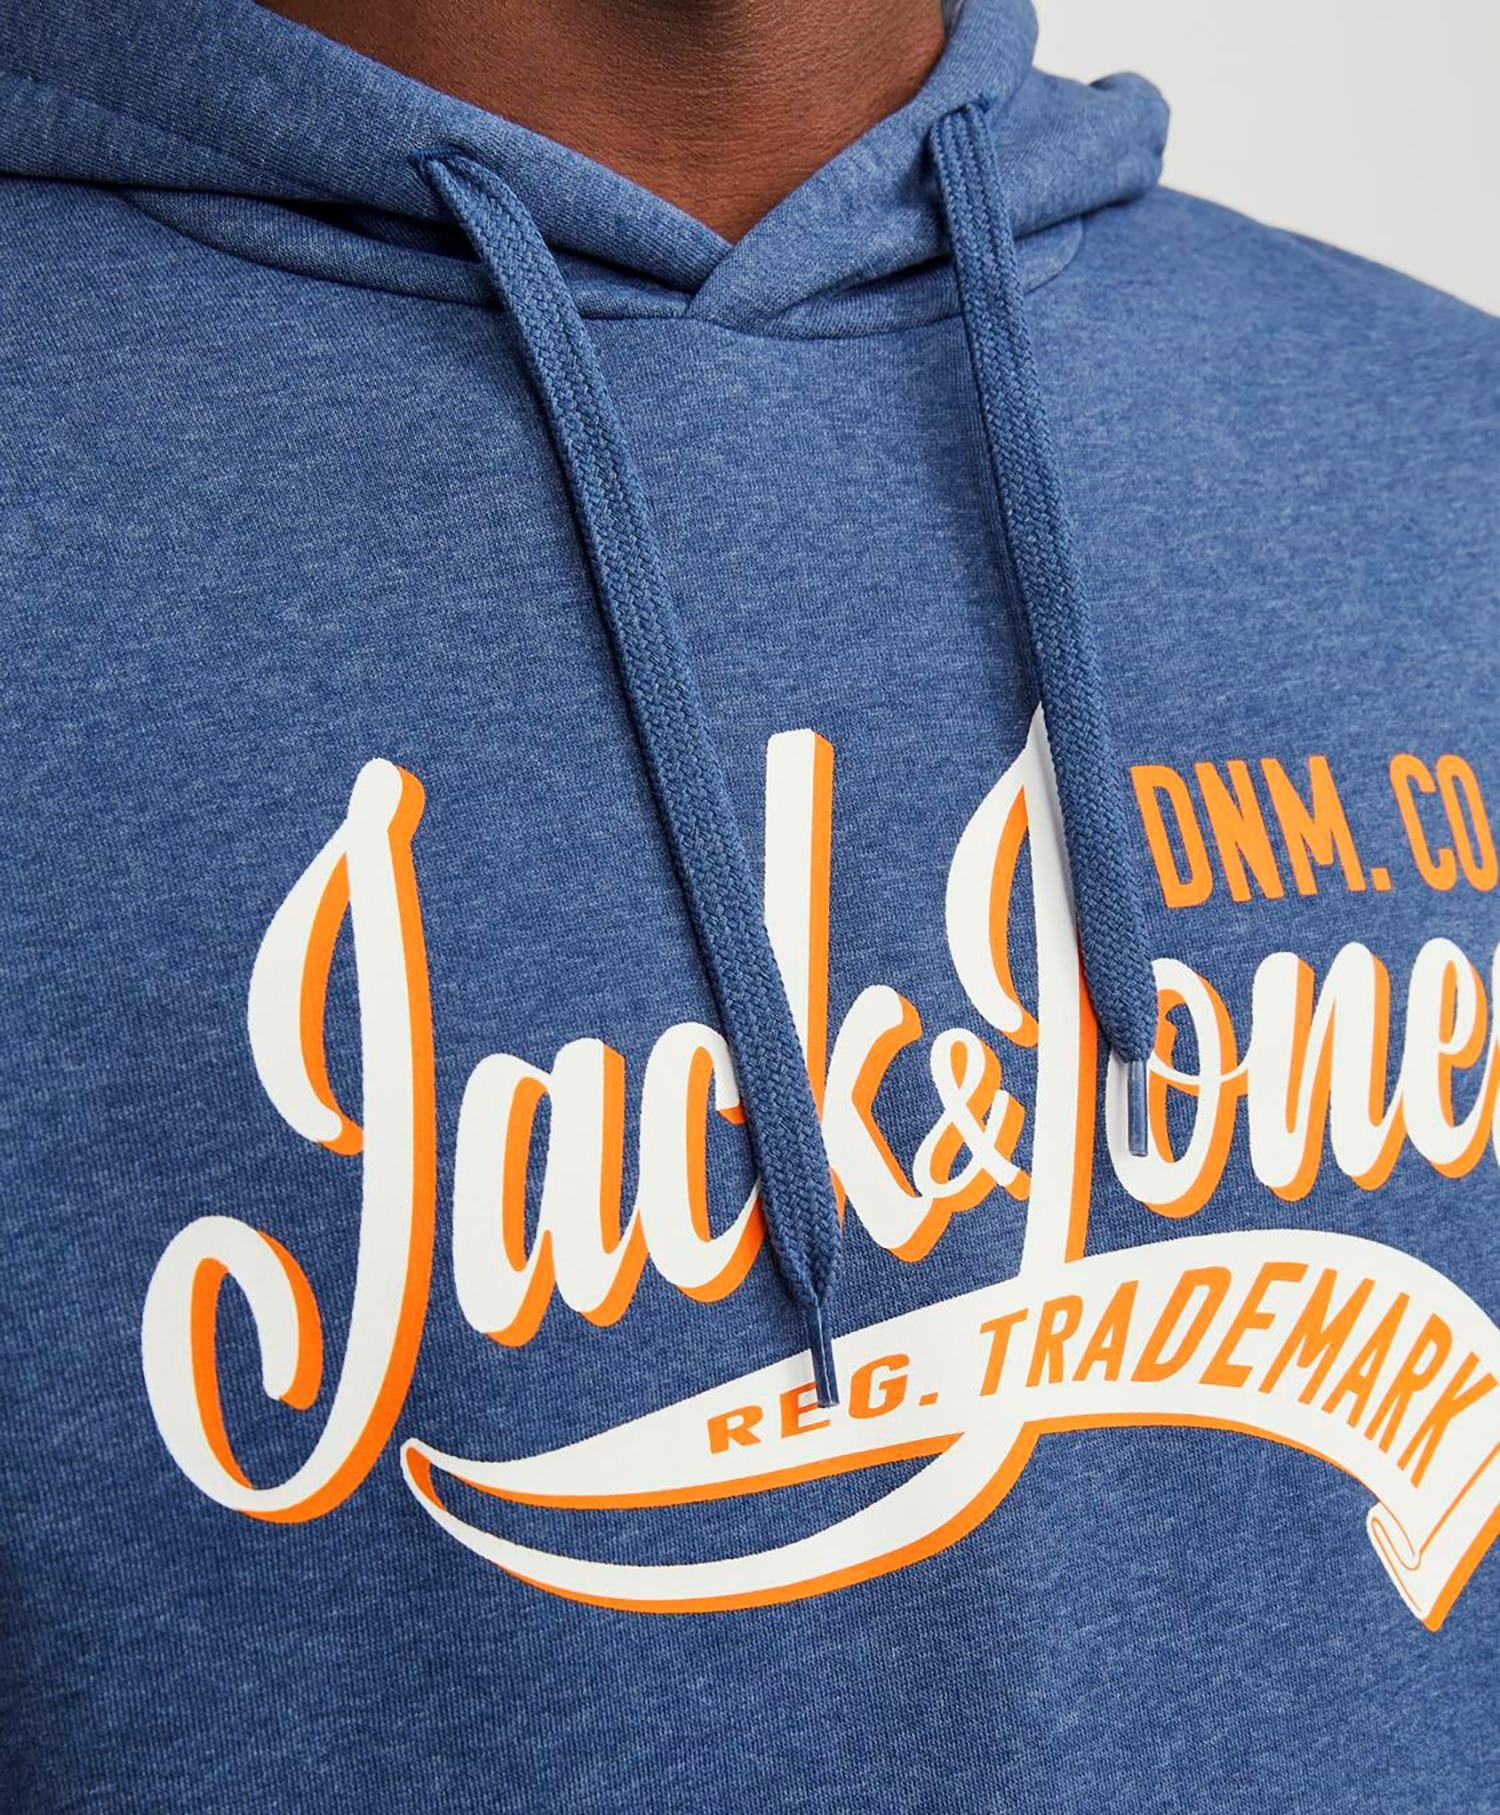 Jack&Jones  Logo Sweathood